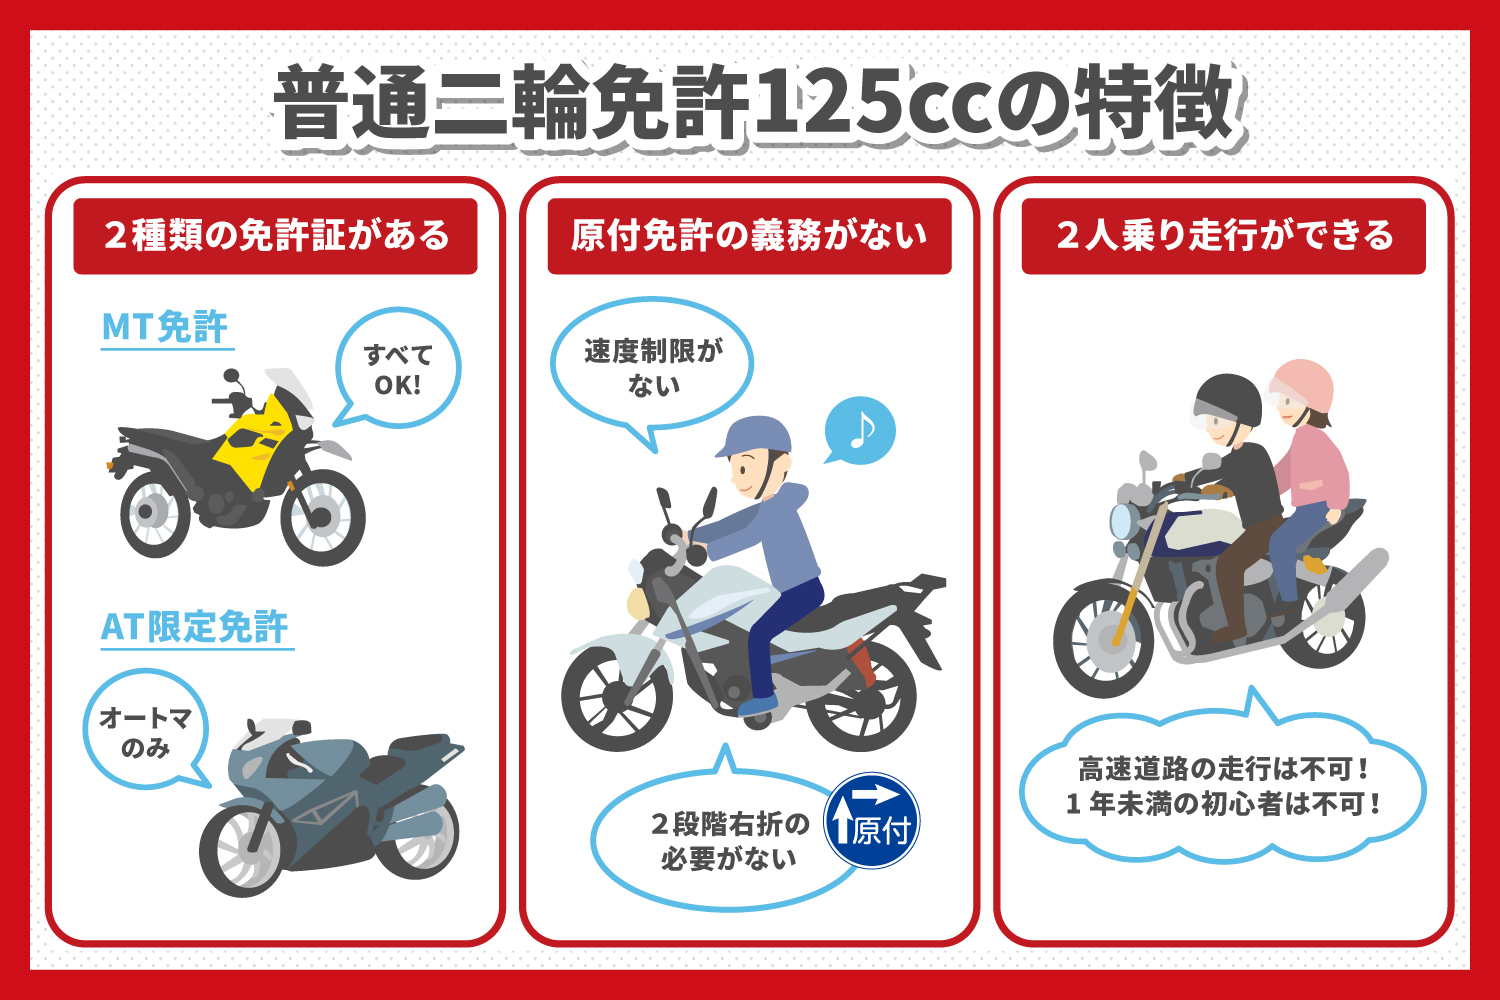 125ccバイク普通二輪免許取得の近道 | 武蔵境自動車教習所